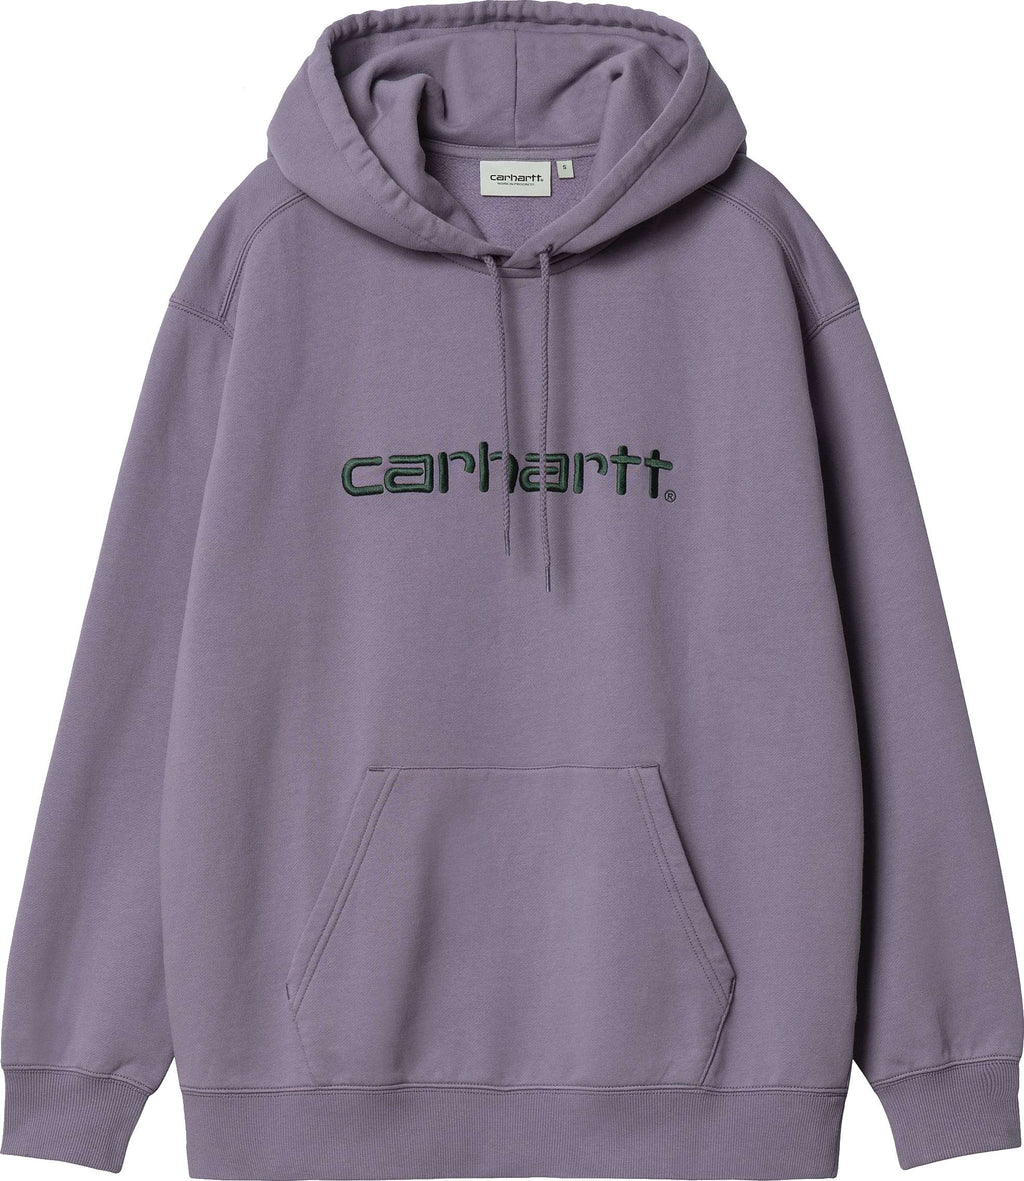  Carhartt Wip Felpa W Hooded Carhartt Sweatshirt Glassy Purple Viola Donna - 1